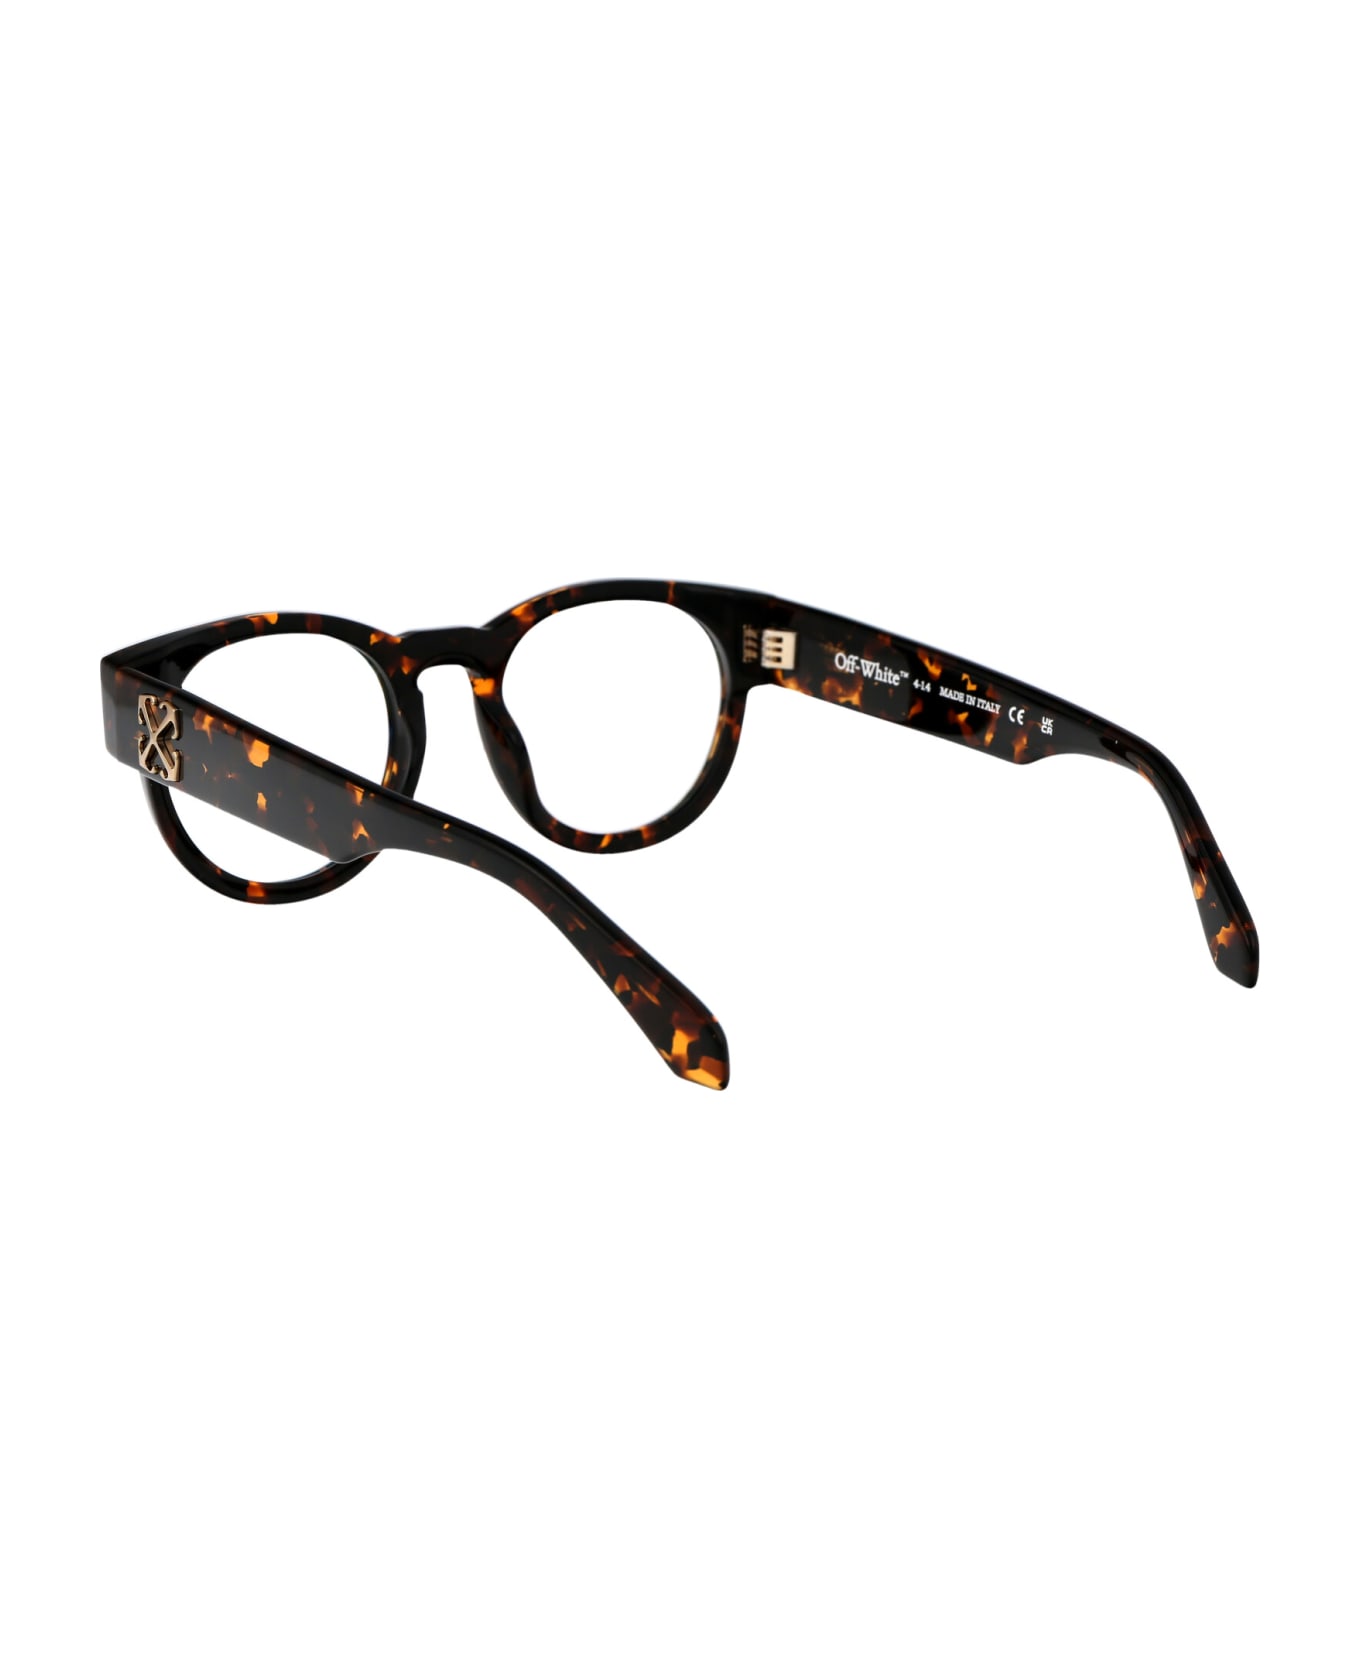 Off-White Optical Style 58 Glasses - 6000 HAVANA